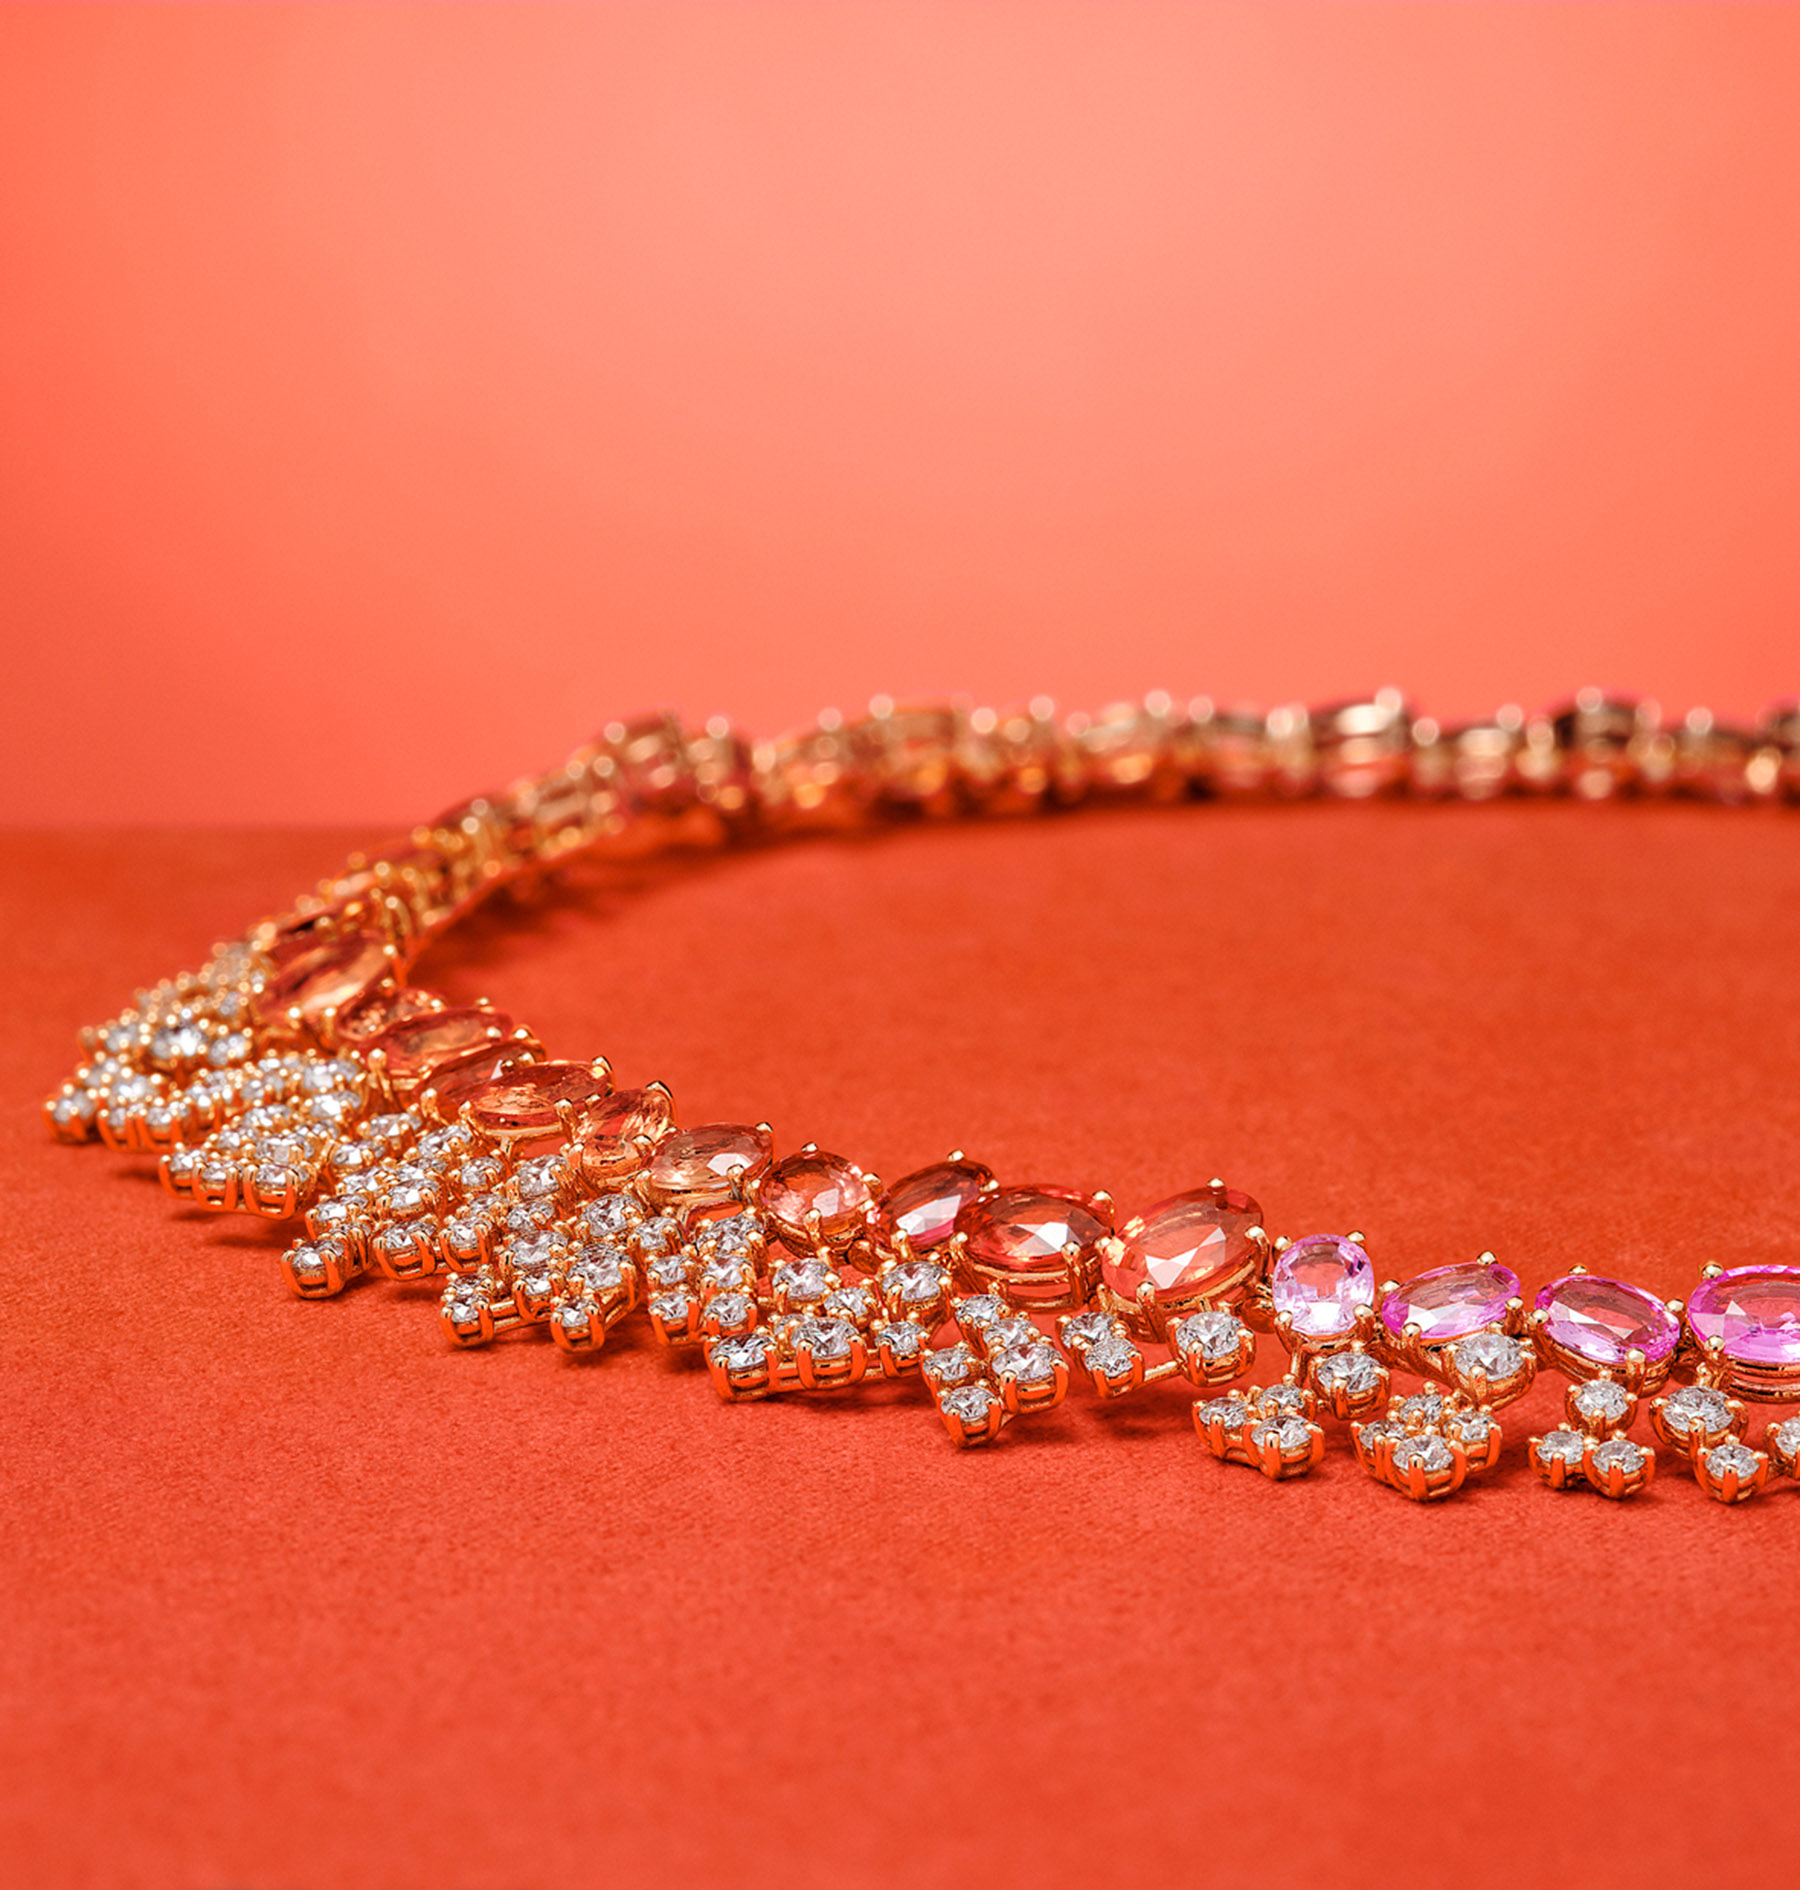 Rainbow Jewels Collection at RABAT Jewelry